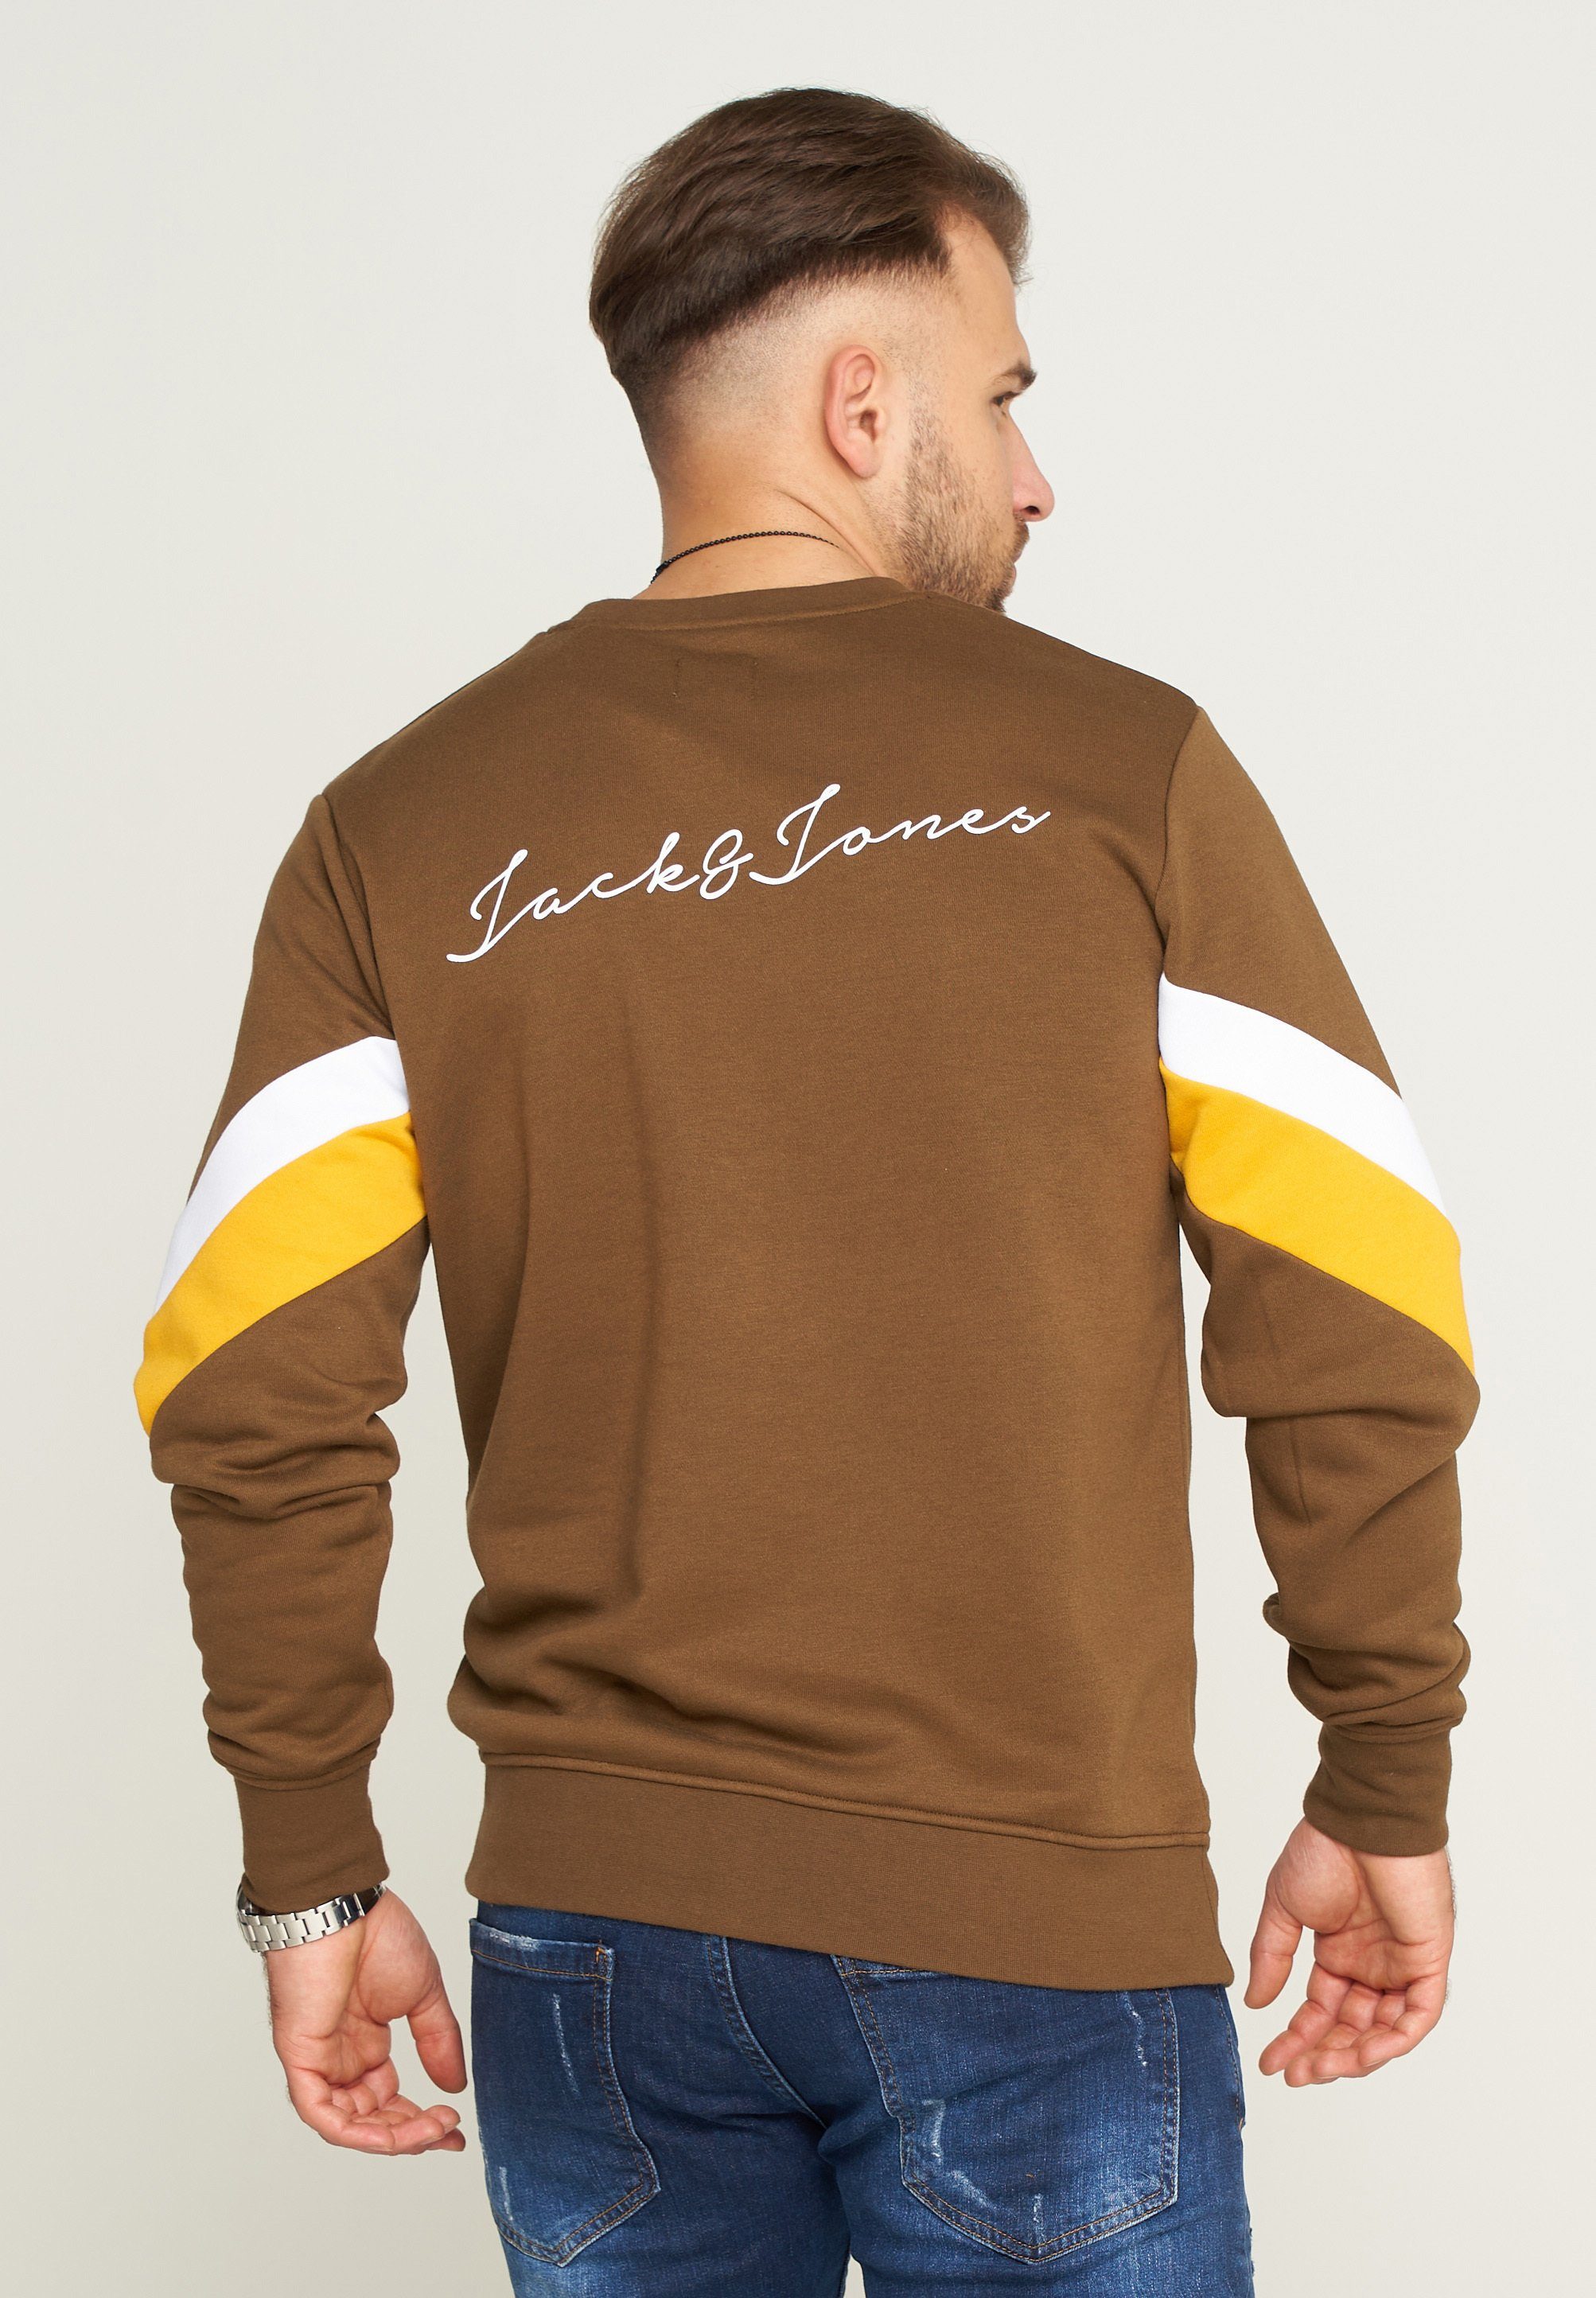 & SWEAT Sweatshirt INFINITY Jack JACOB Desert CREW Jones Palm NECK